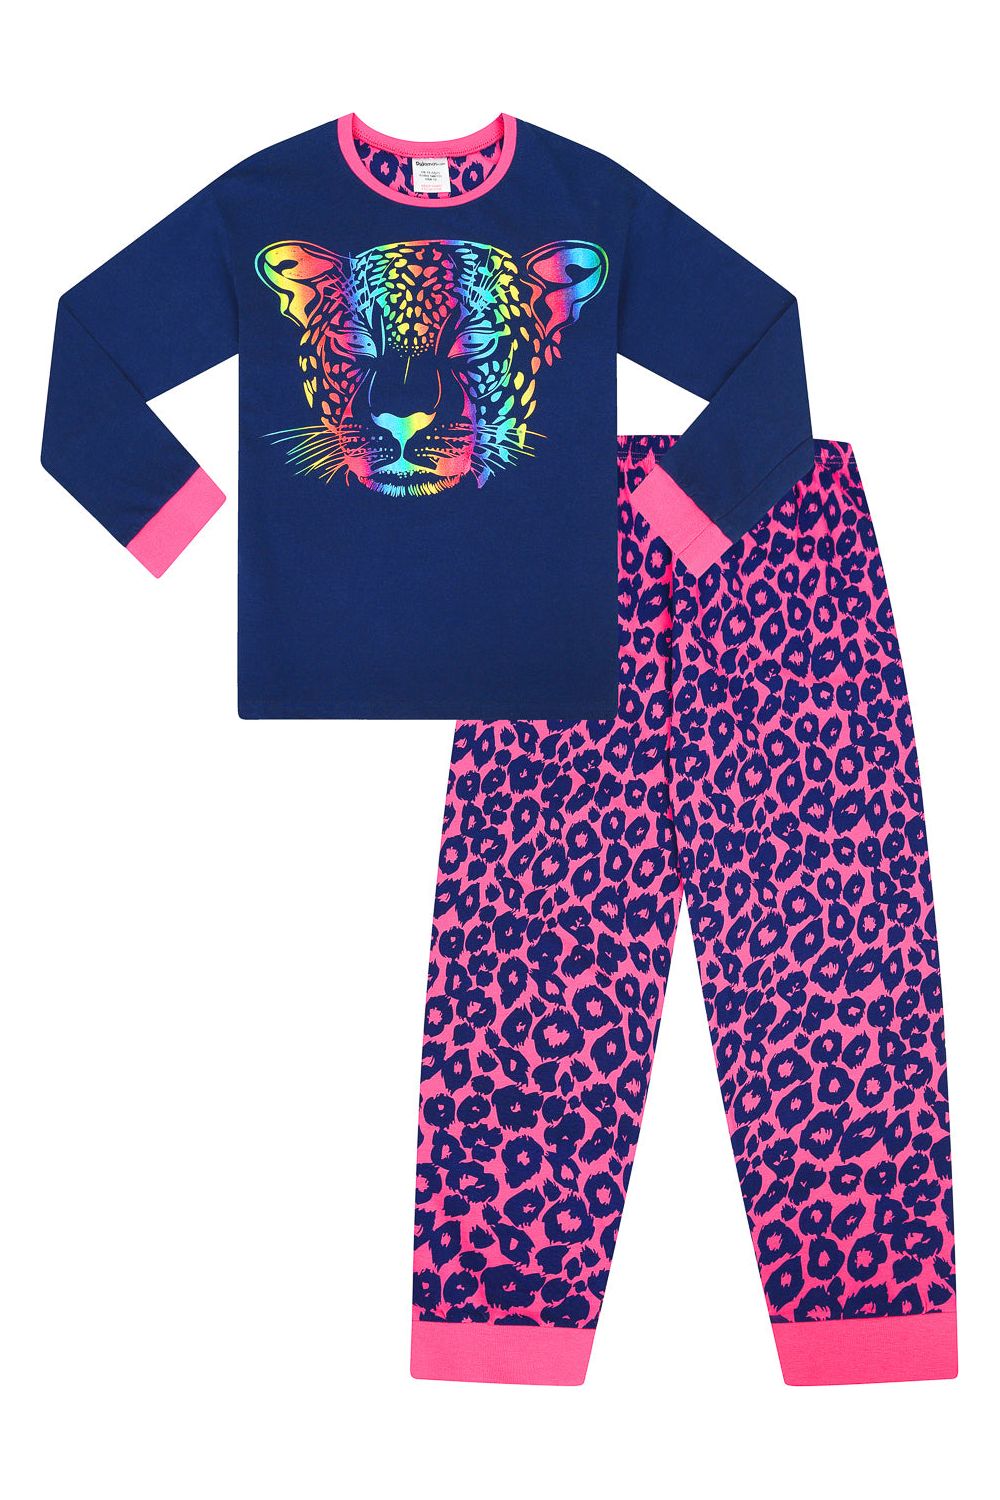 Girls Leopard Foil Rainbow Patterned Designed Long Pyjamas